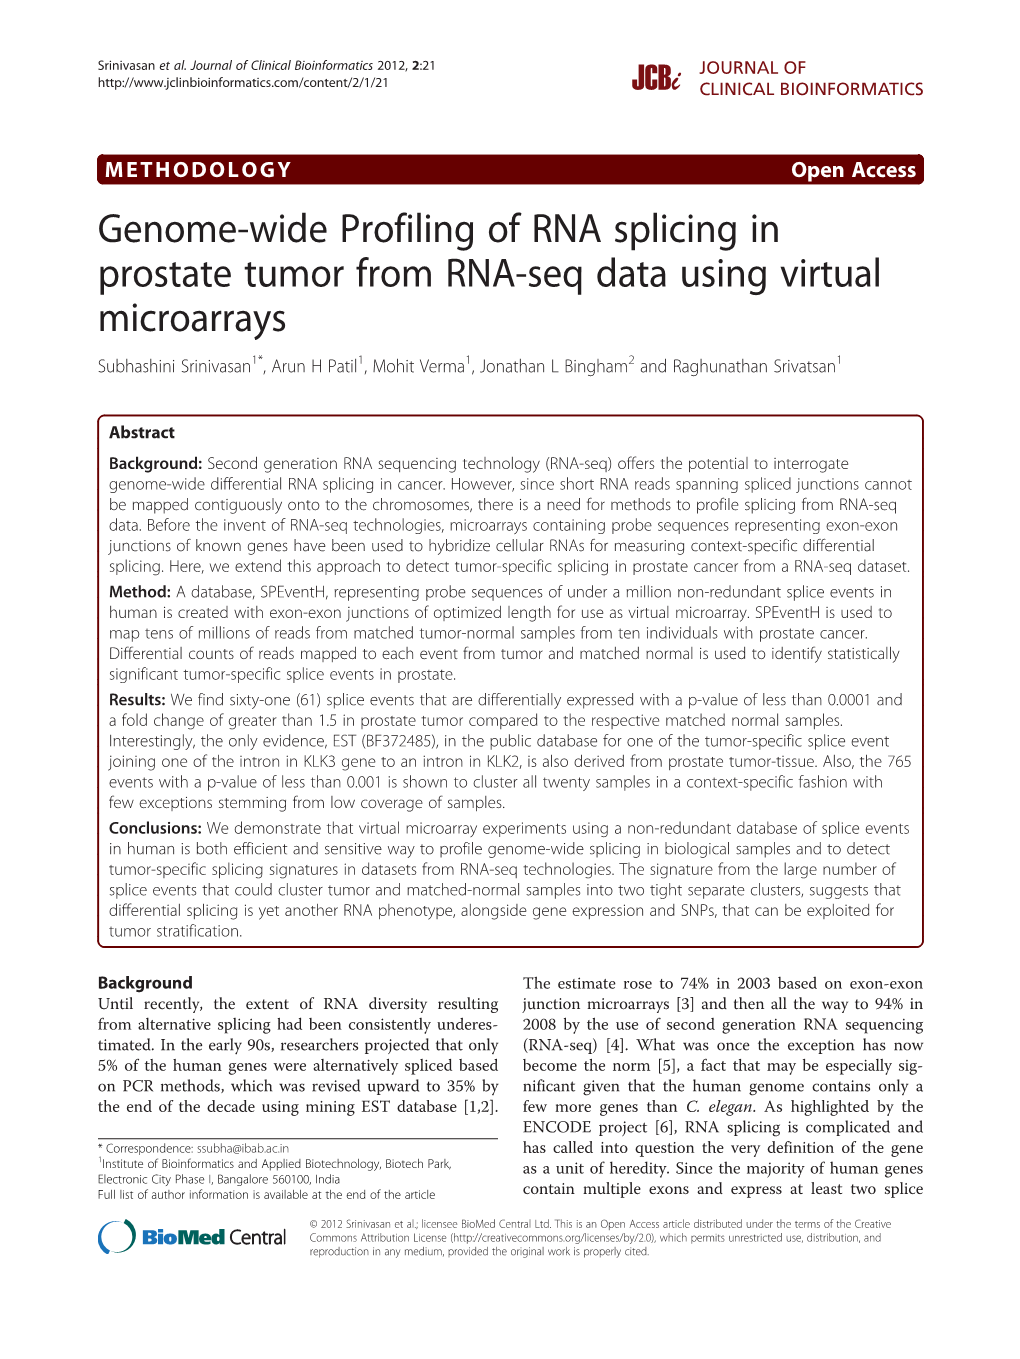 Genome-Wide Profiling of RNA Splicing in Prostate Tumor from RNA